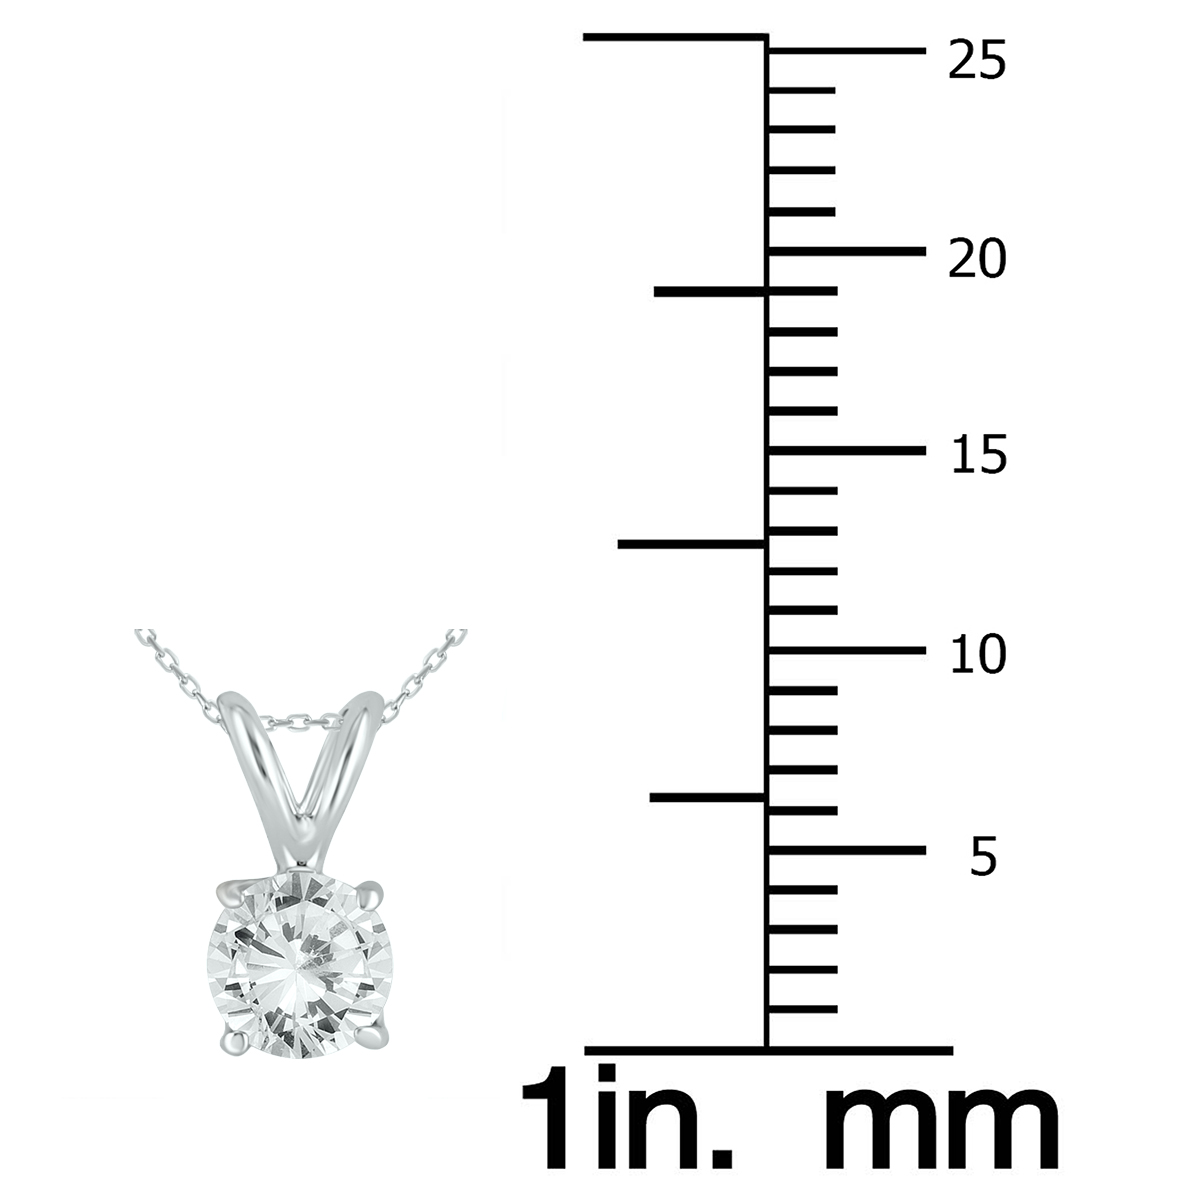 szul.com 14K White Gold 1 Carat TW AGS Certified Diamond Pendant and Earring Matching Set